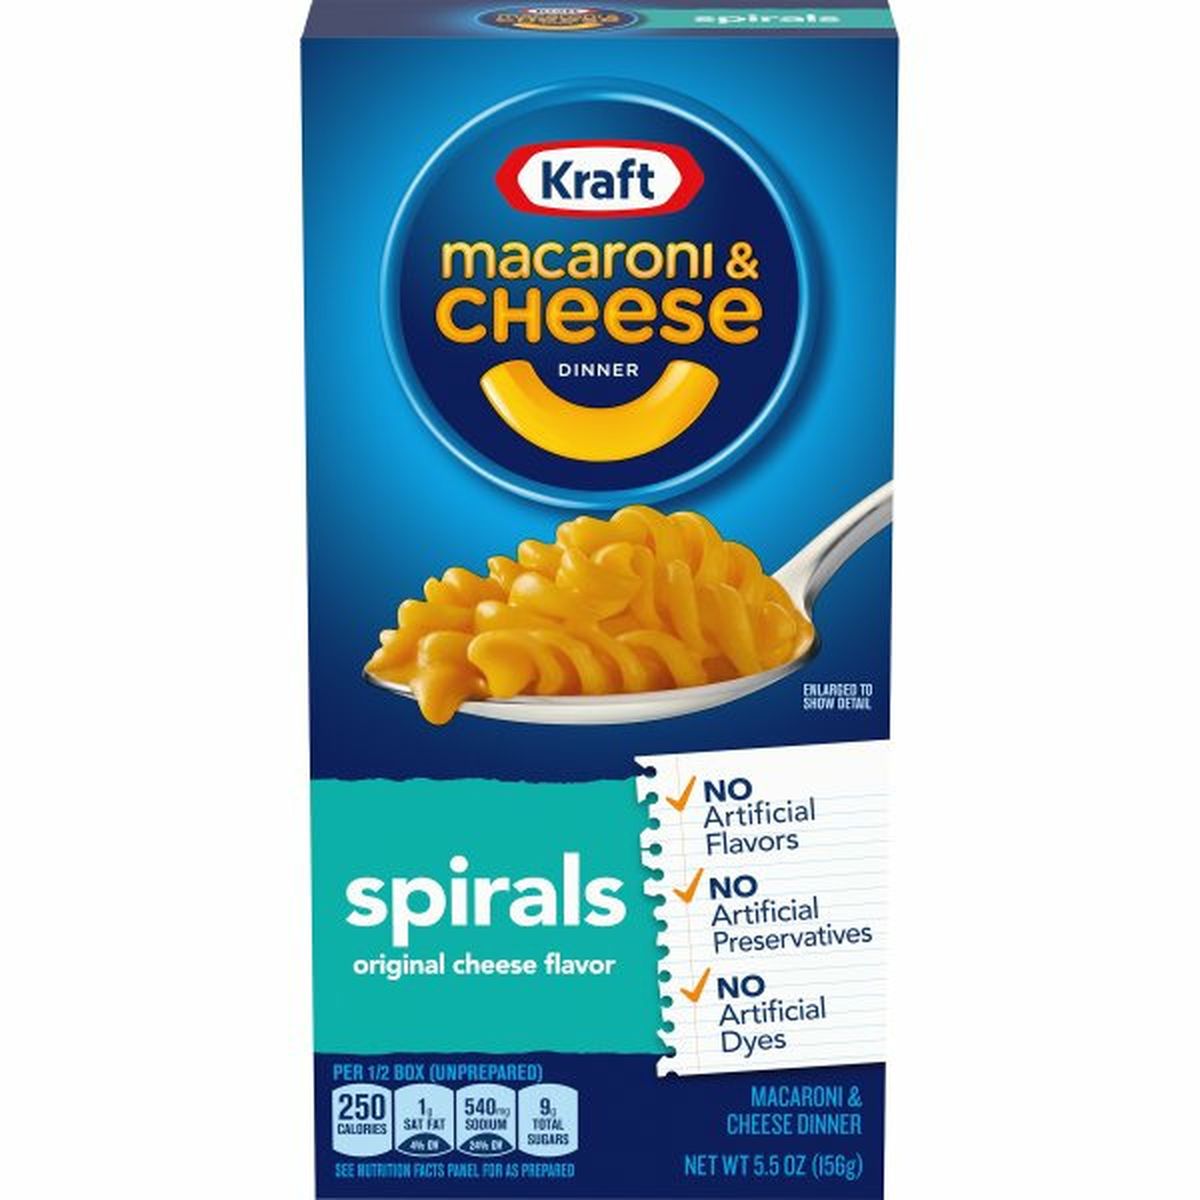 Calories in Kraft Spirals Macaroni & Cheese Dinner